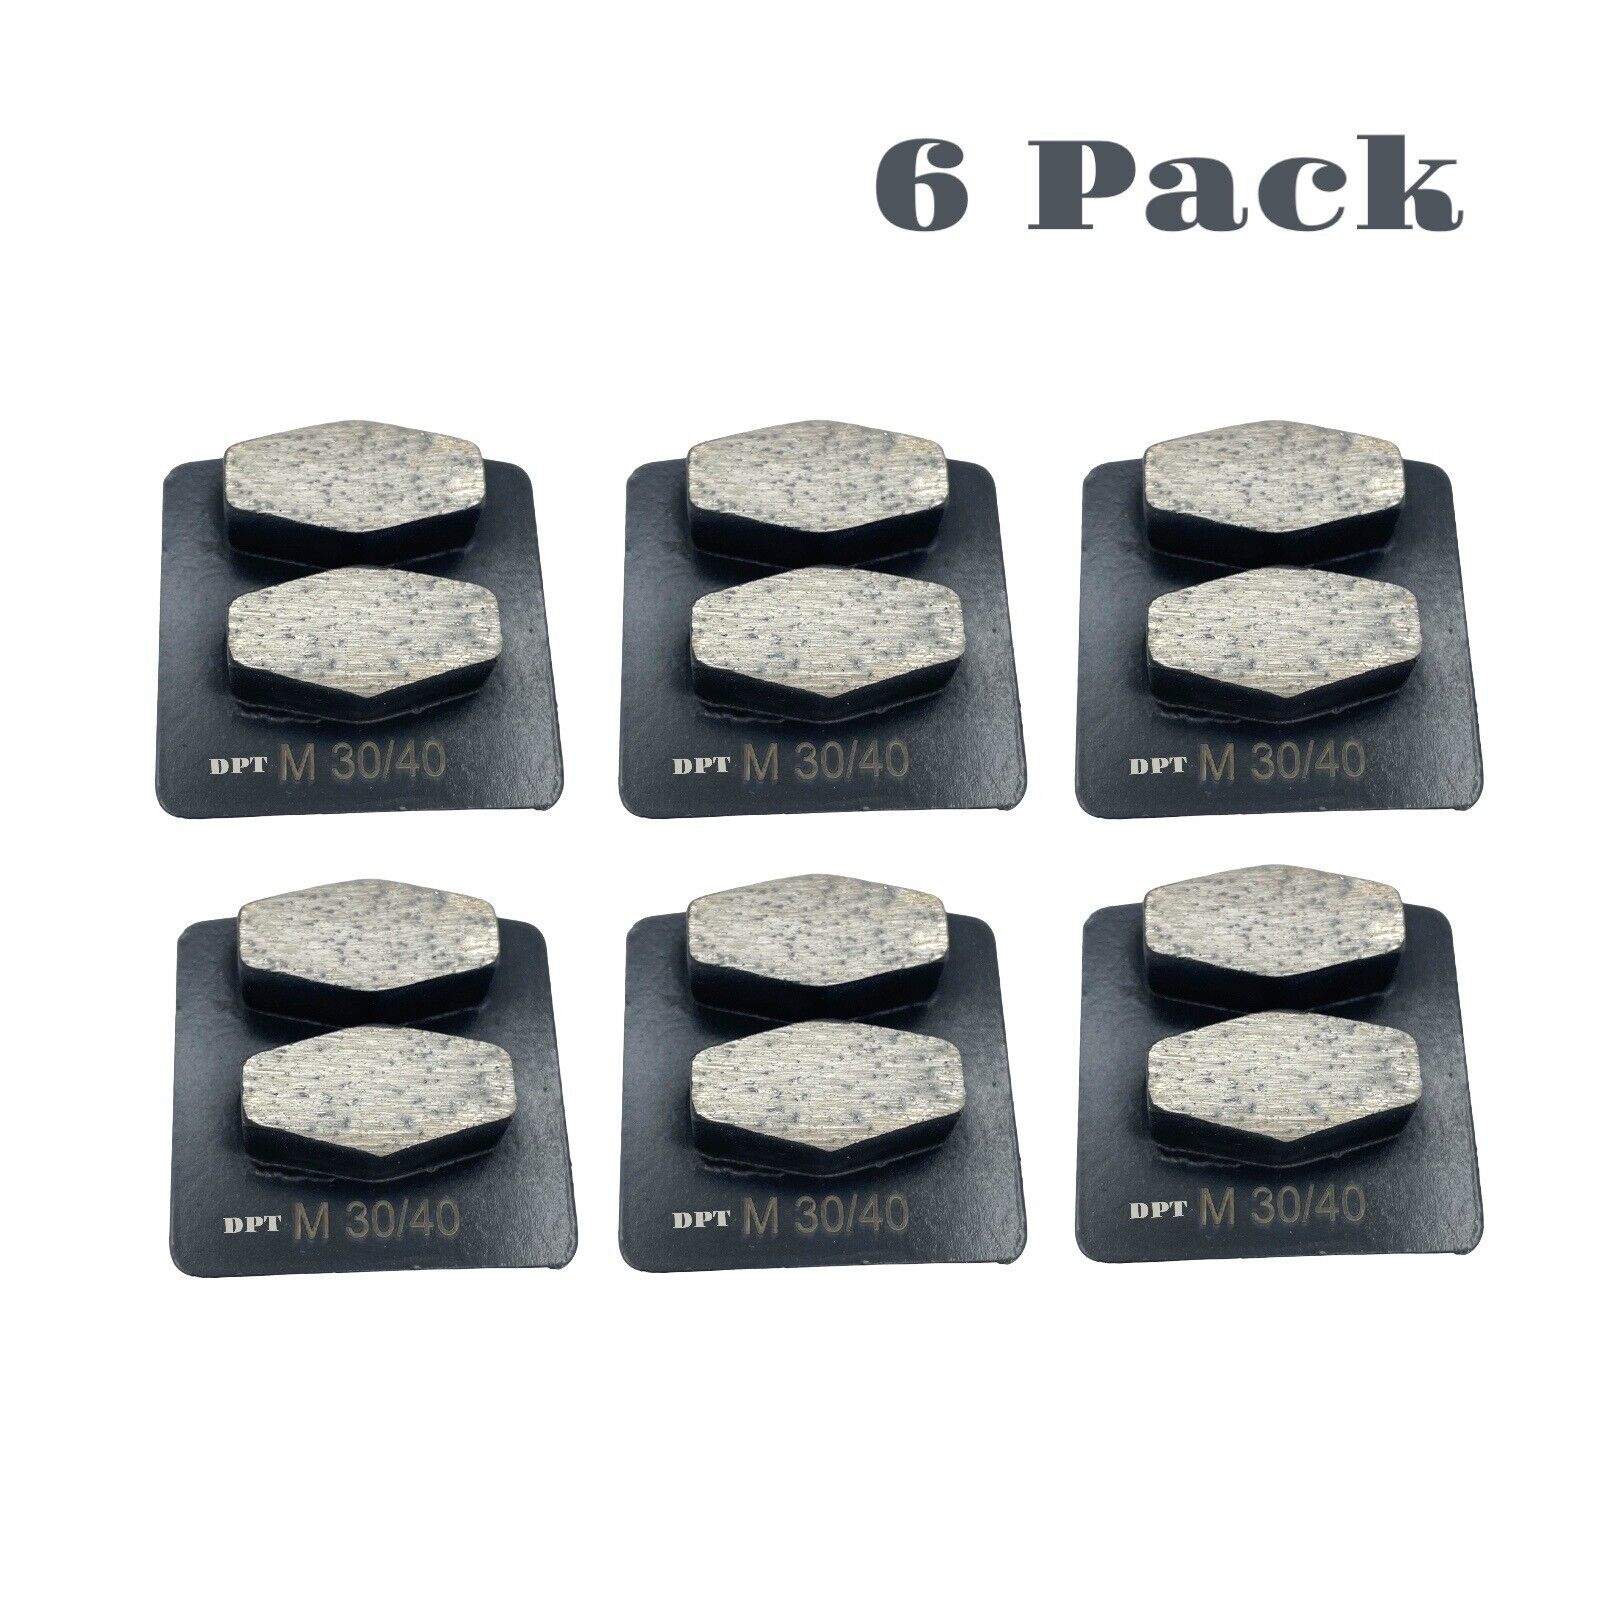 6 Pack Grinding Discs for Husqvarna PG Concrete Grinders 30 Grit Medium Bond - Picture 1 of 12